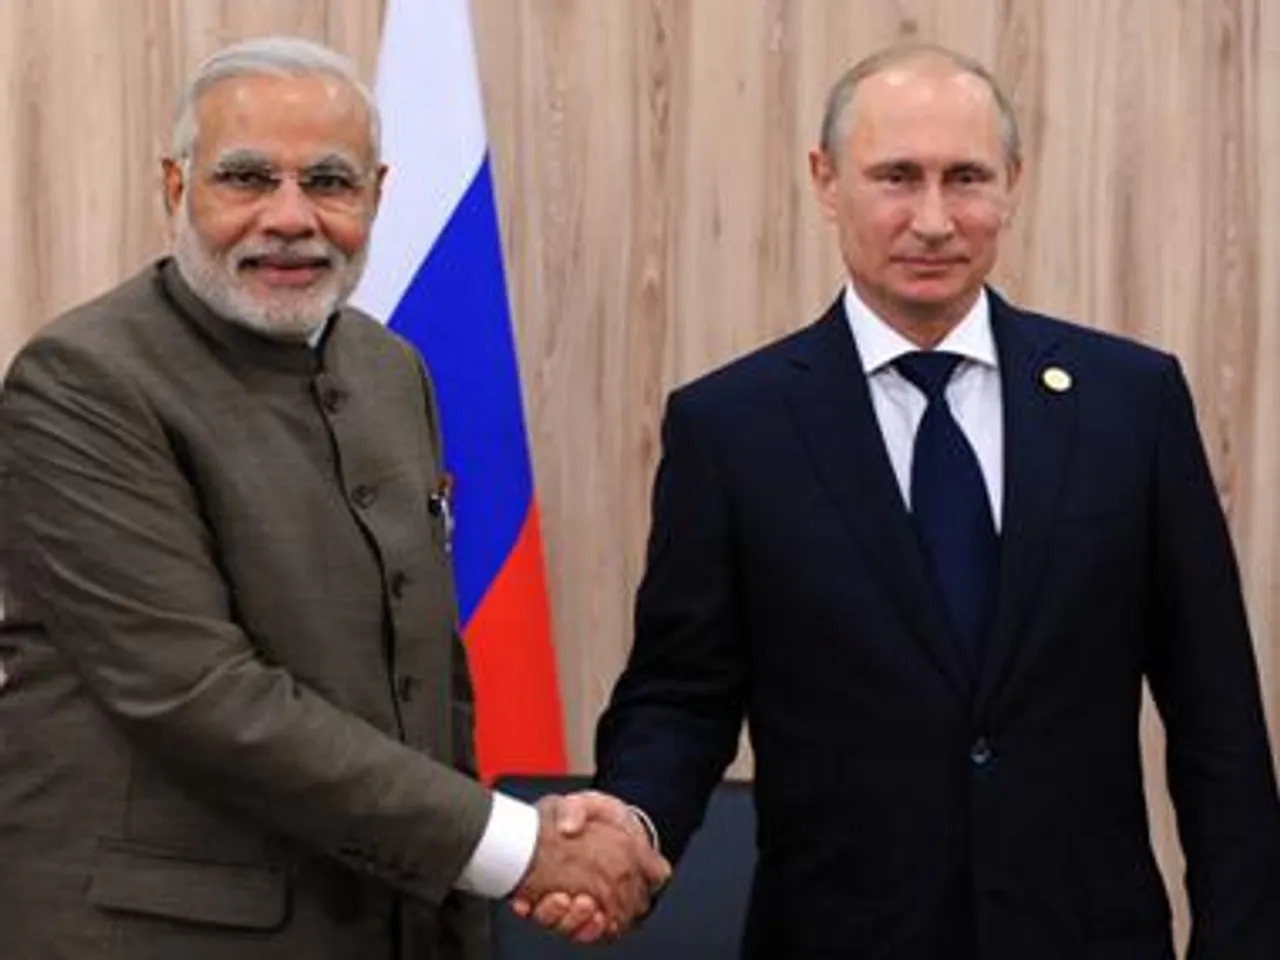 Vladimir Putin's Visit to New Delhi To Set The Evolution of India-Russia Relations